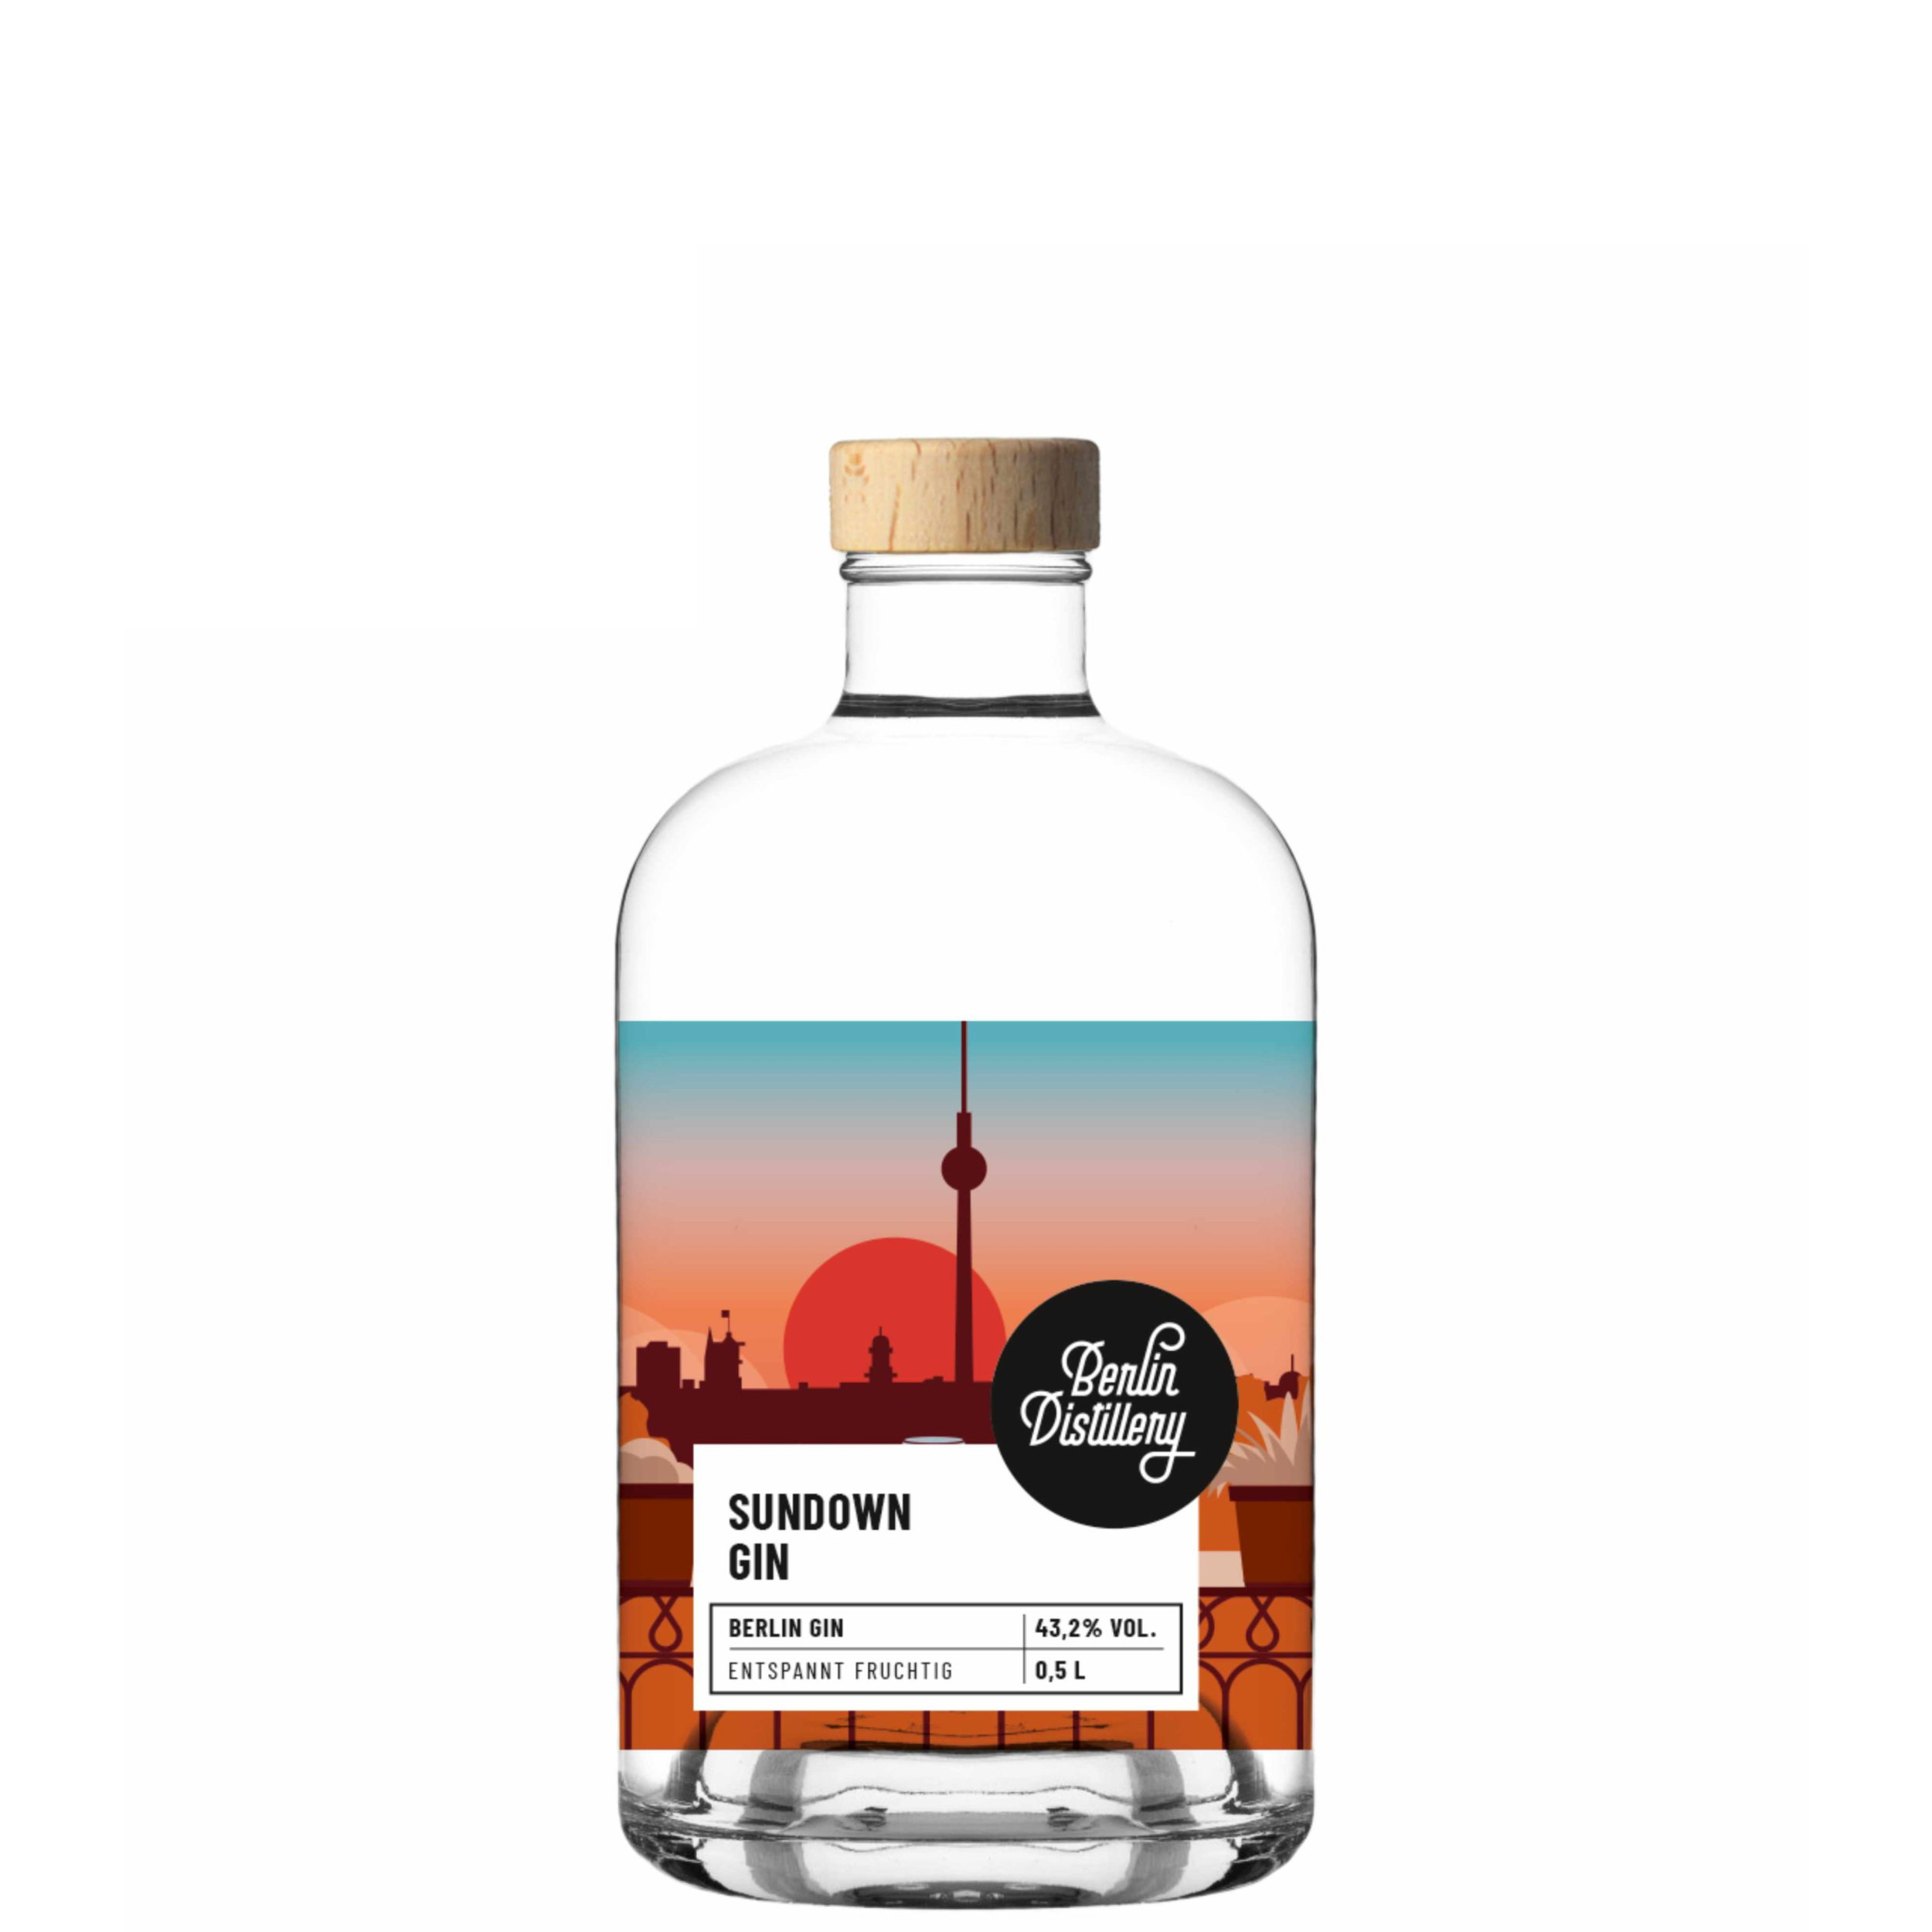 Berliner Distillery Sundown Gin